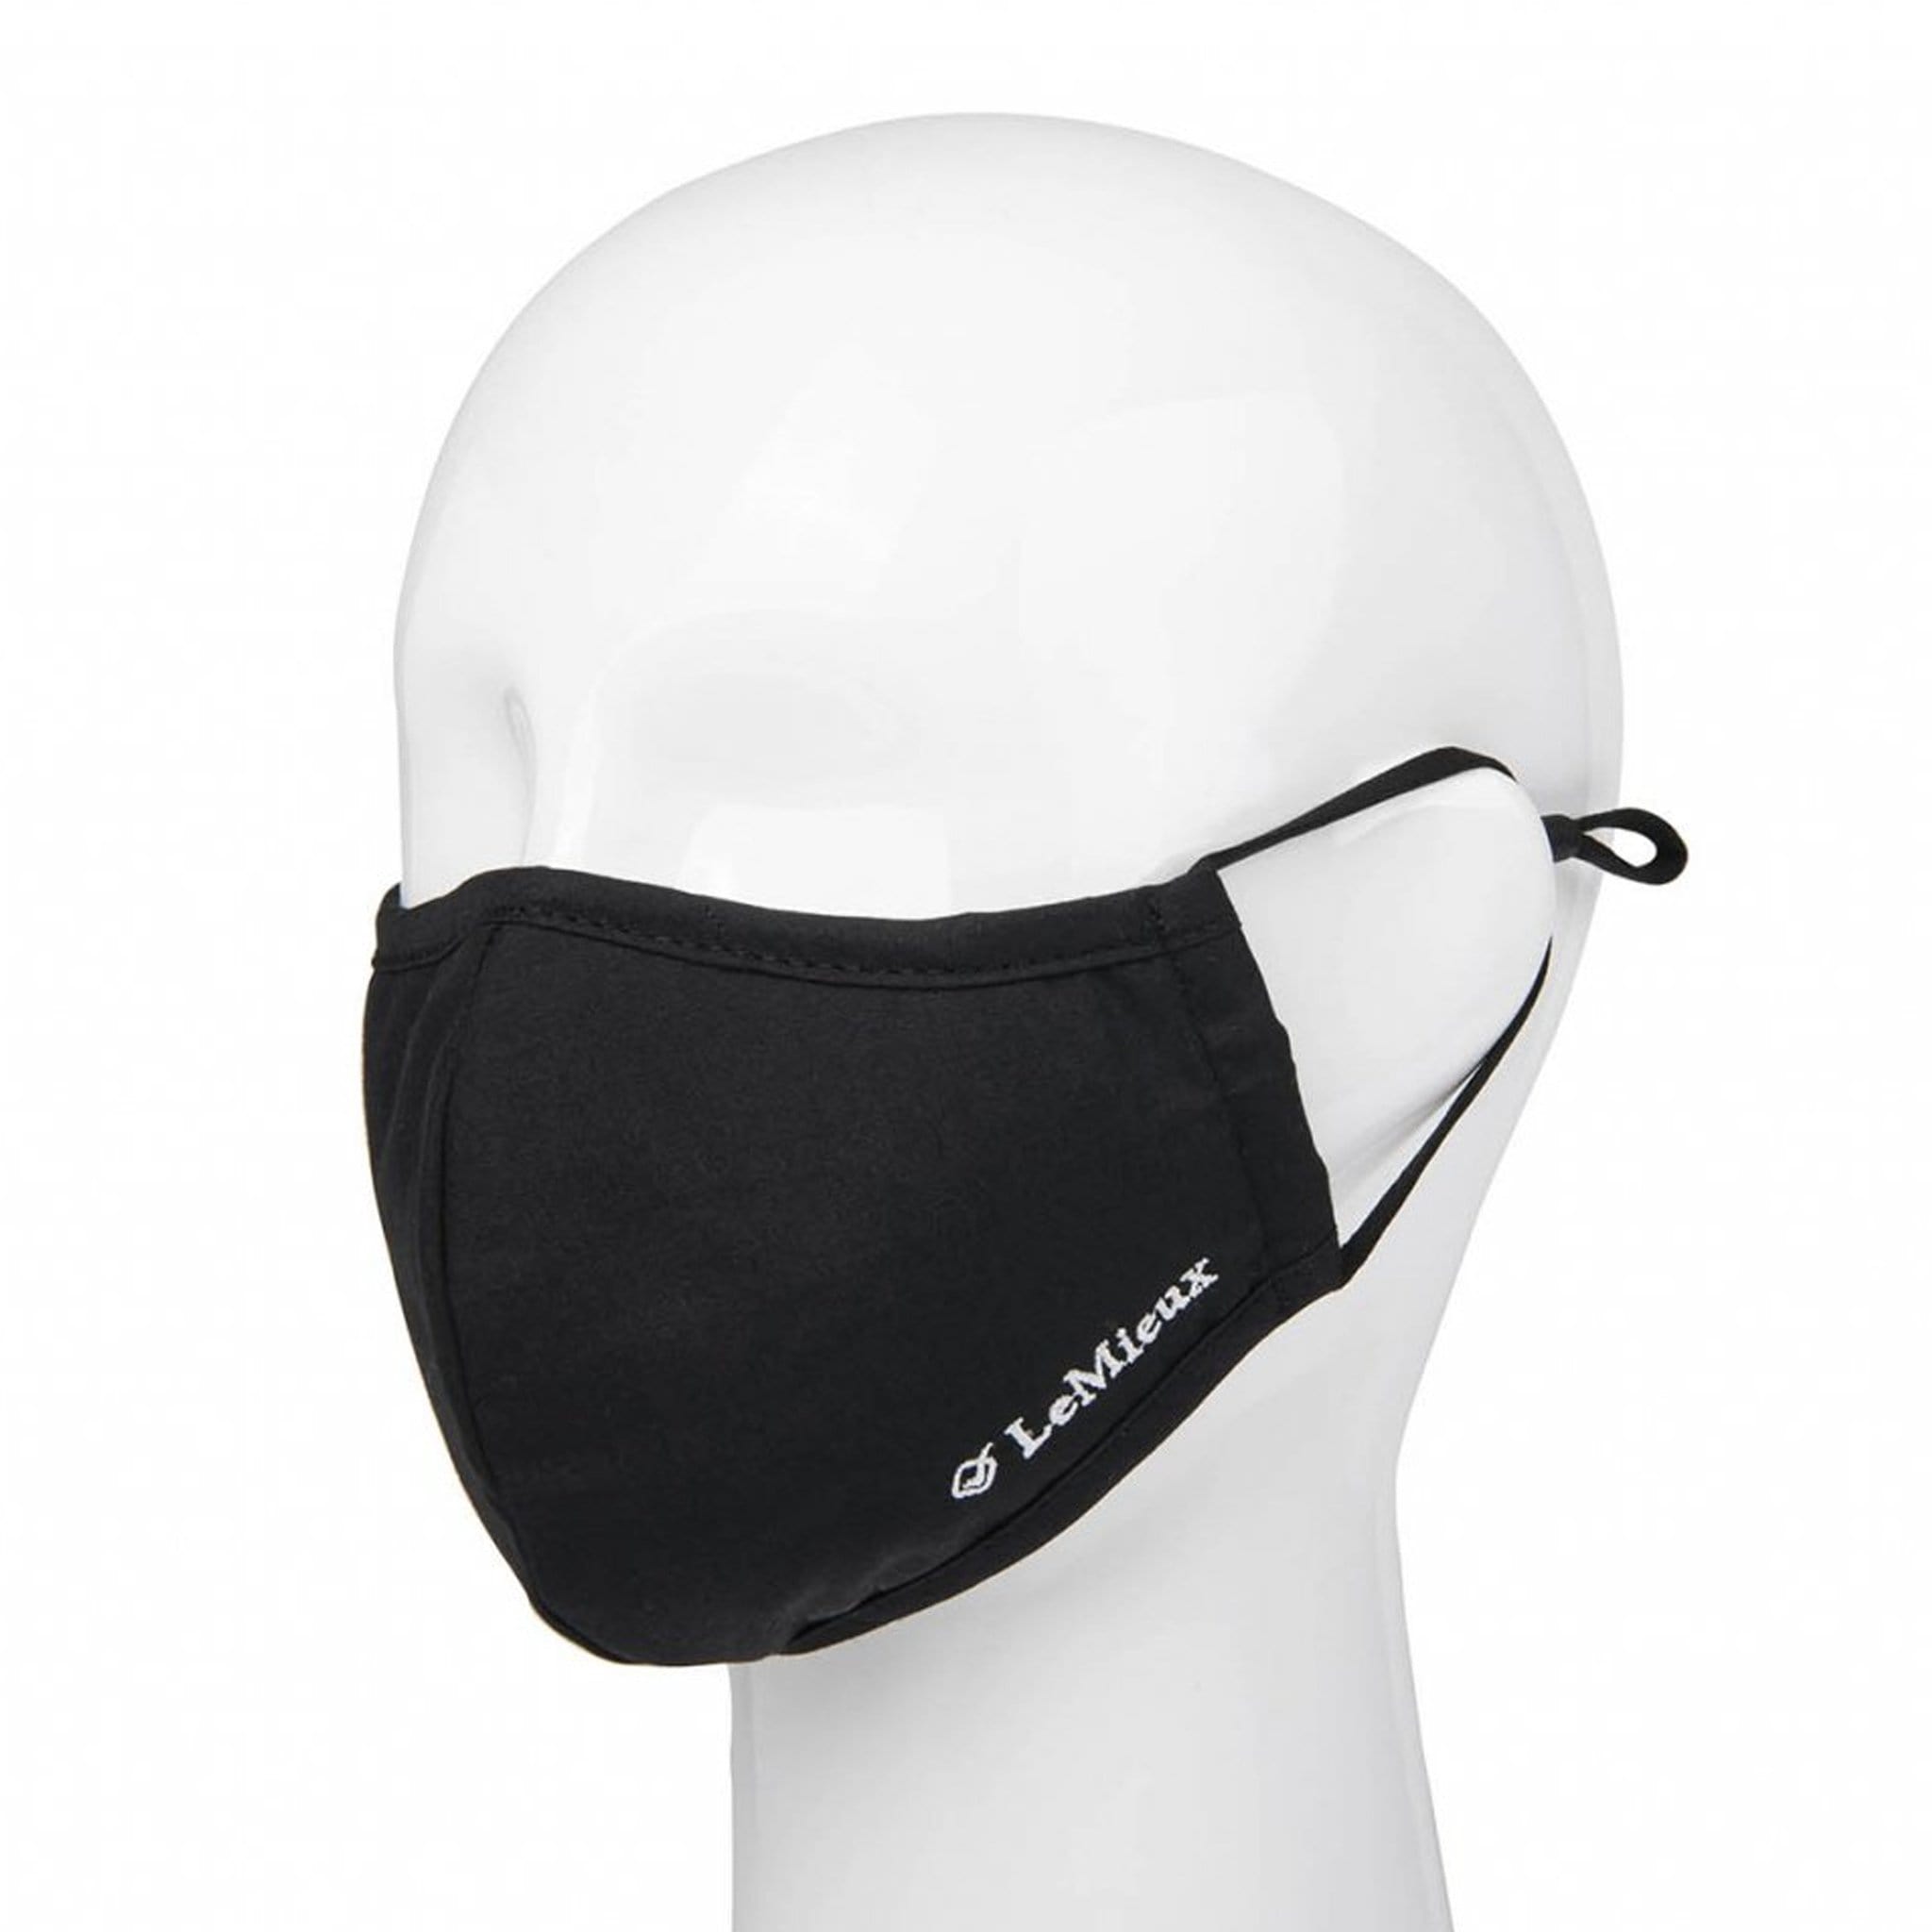 LeMieux Reusable Face Mask 4838 Black and White Sport Left Side